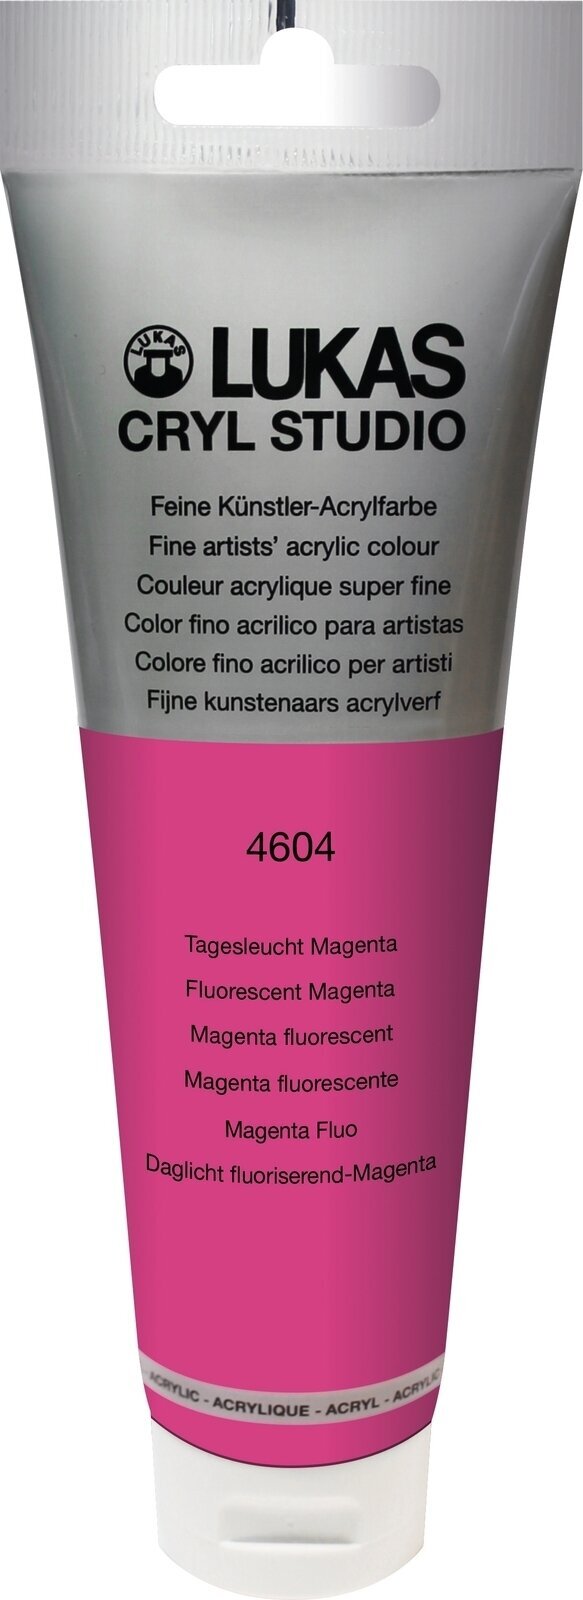 Acrylic Paint Lukas Cryl Studio Acrylic Paint Plastic Tube Acrylic Paint Fluorescent Magenta 125 ml 1 pc